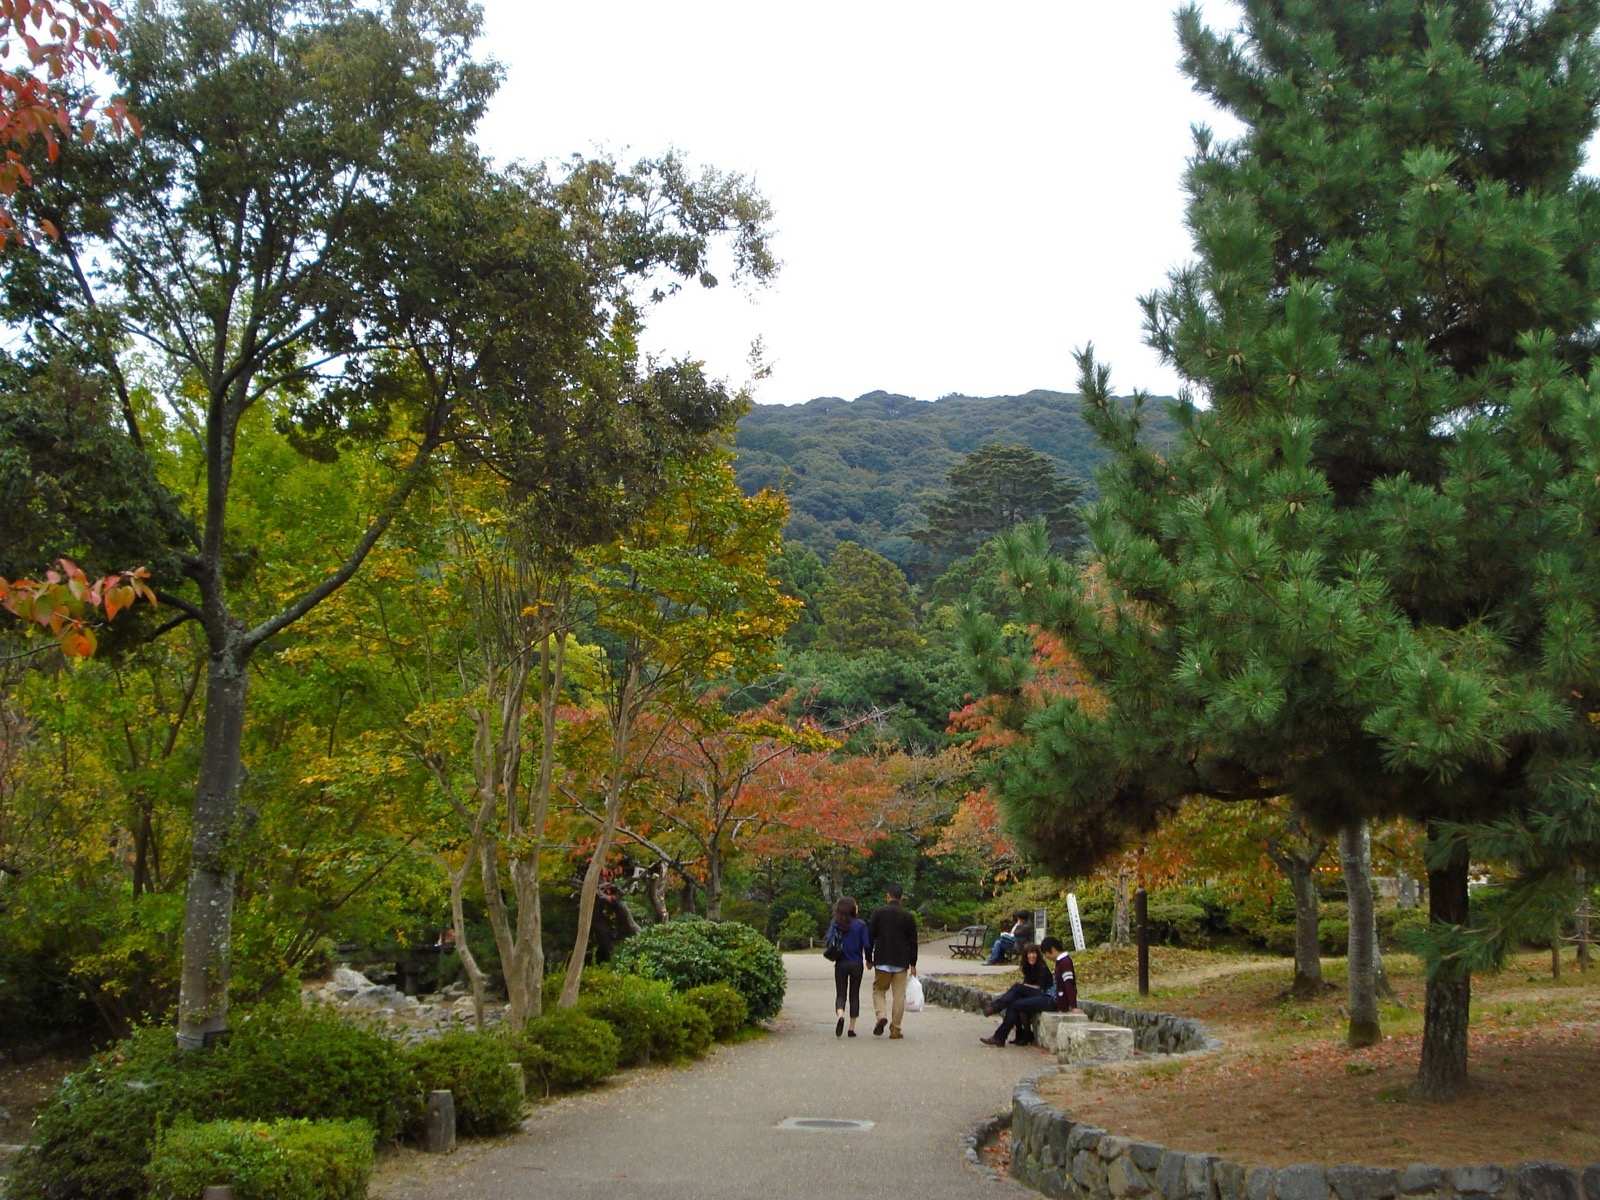 Photo of Maruyama Park, Japan (円山公園 (Maruyama Park) by Carles Tomás Martí)